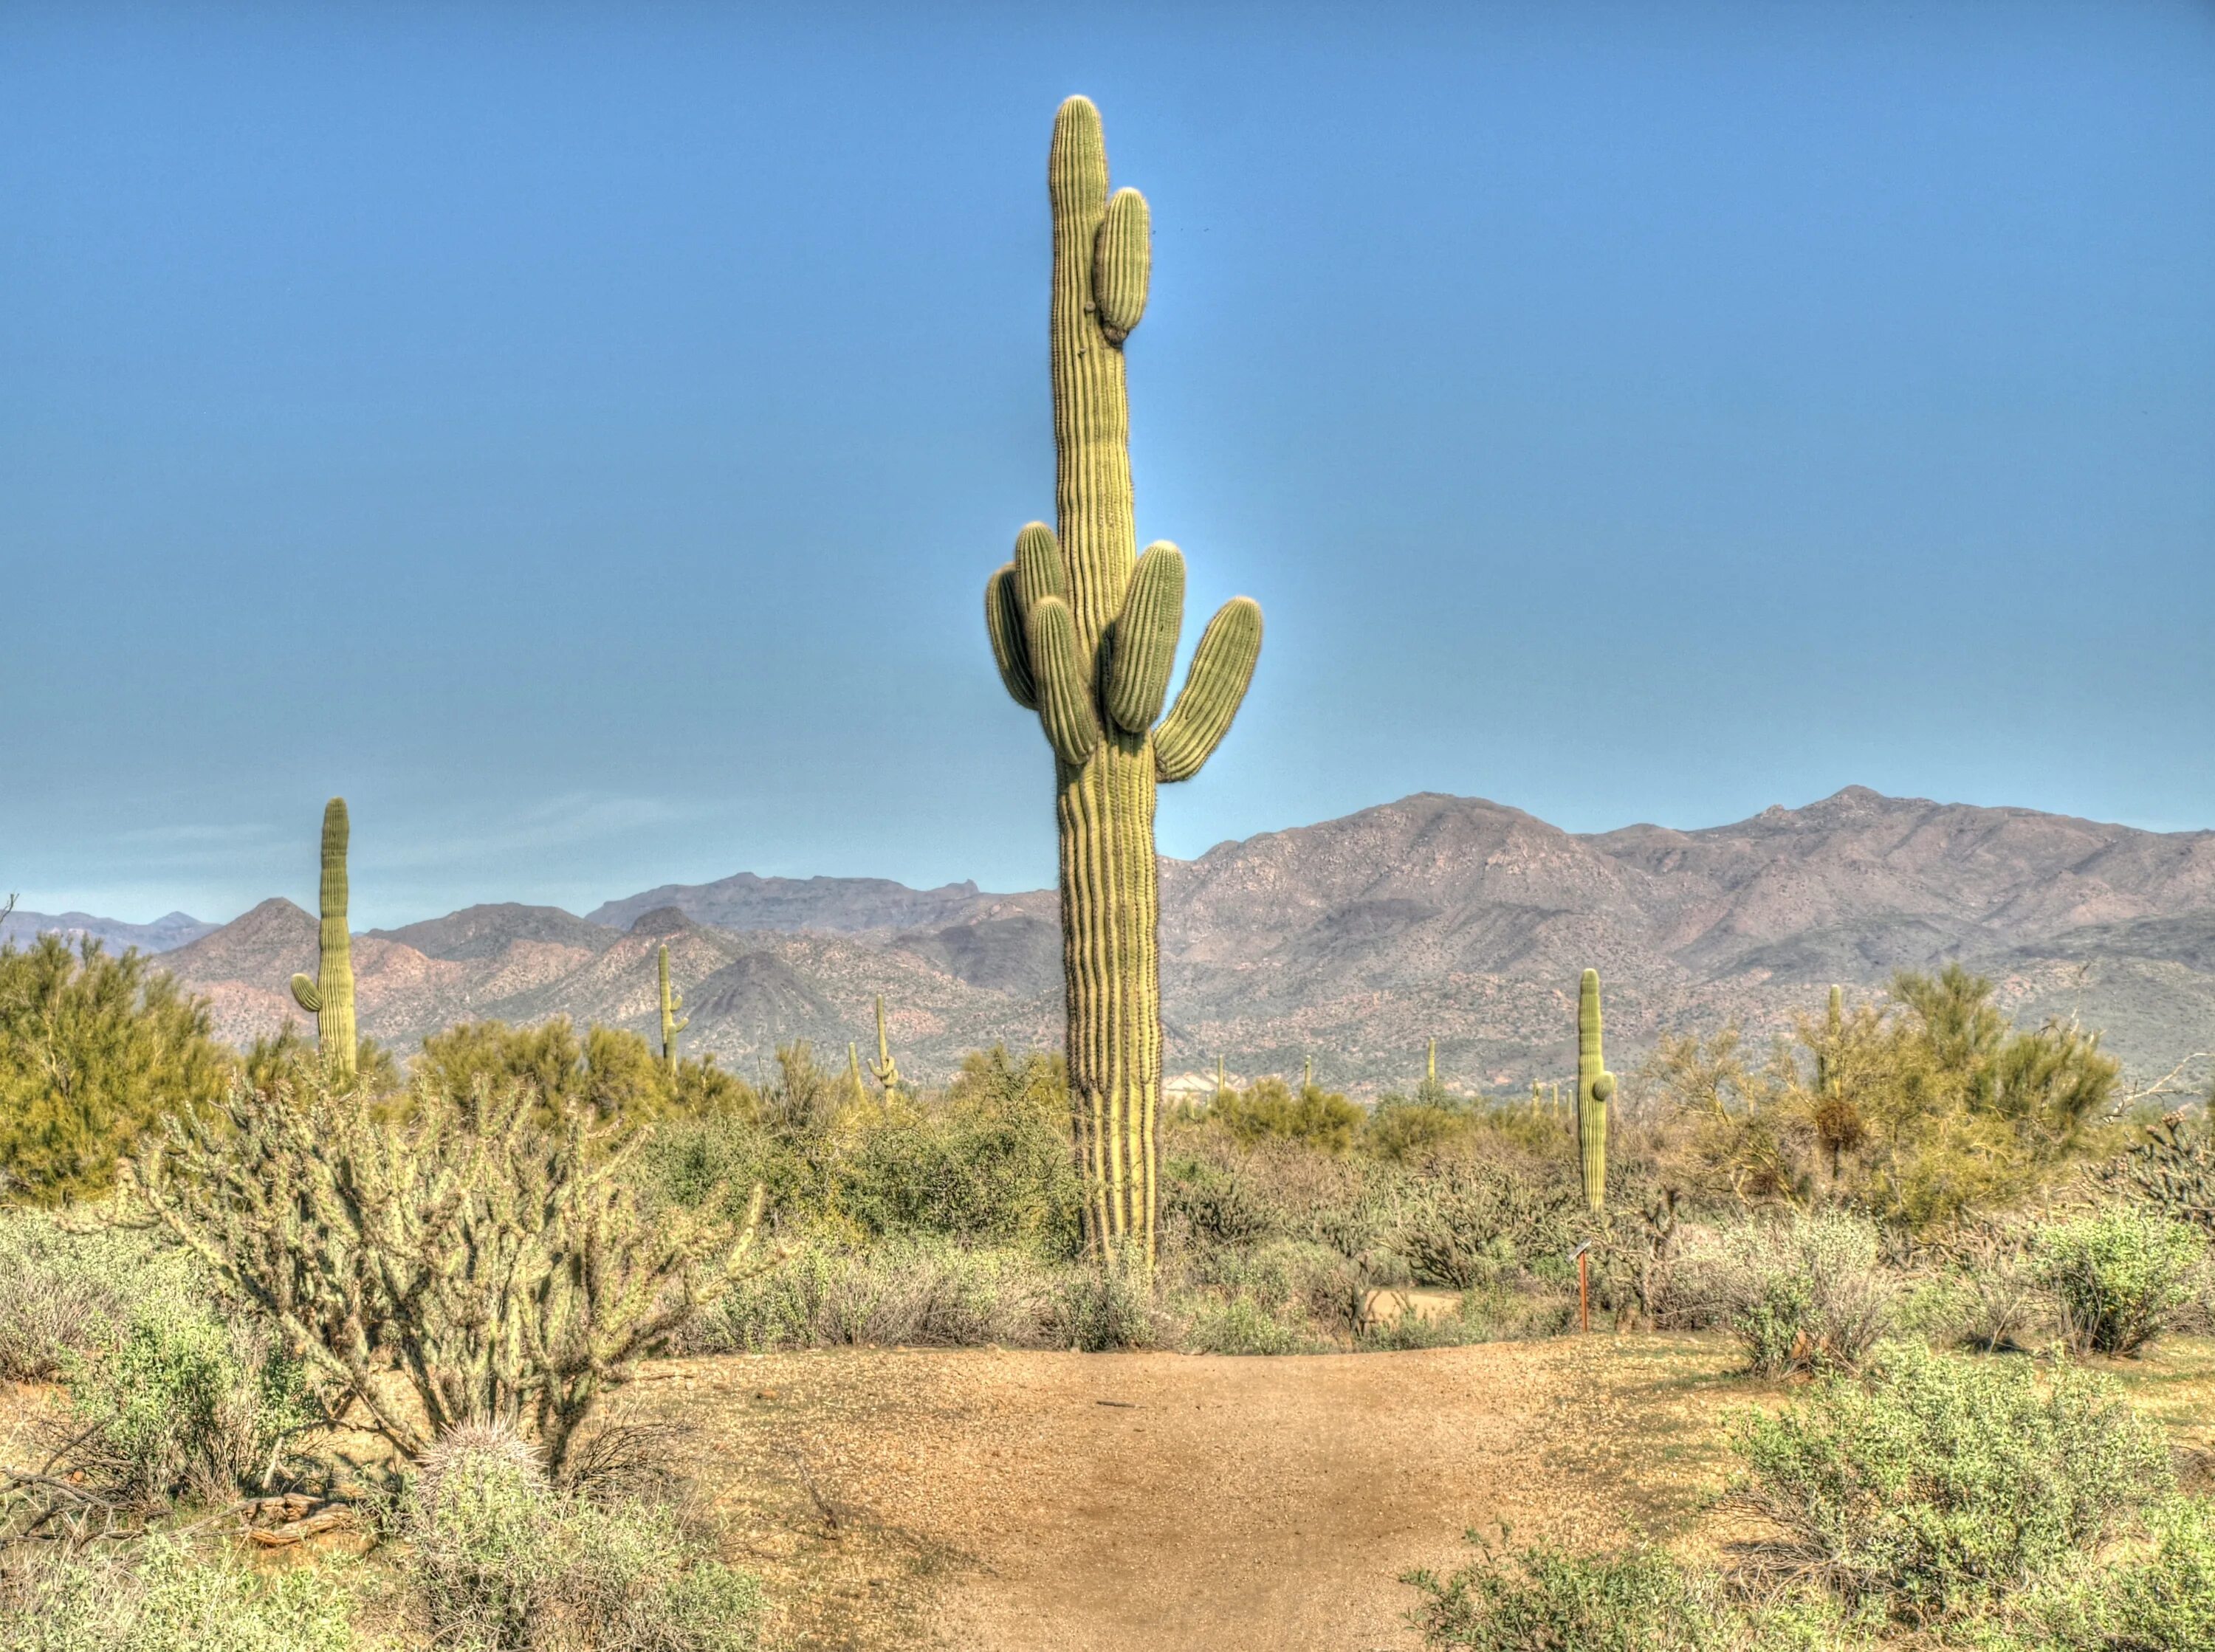 Desert plant. Кактус Сагуаро в пустыне. Карнегия в пустыне. Мексика кактусы Сагуаро. Кактус Сагуаро в Аризоне.